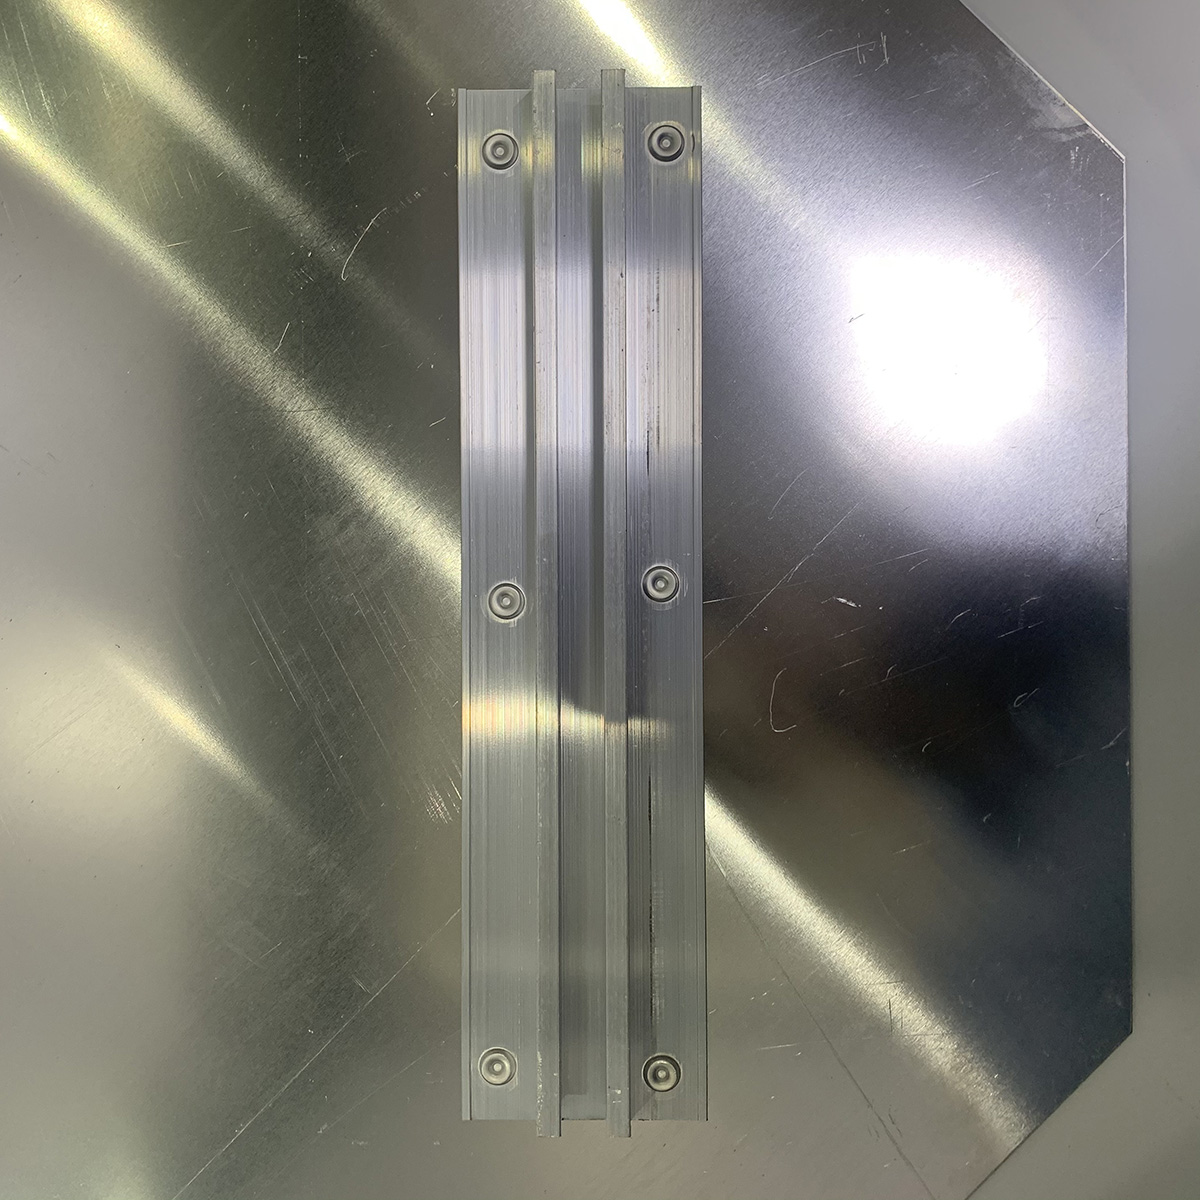 Customized Reflective Aluminium Traffic Sign Plate 8-sided Shape